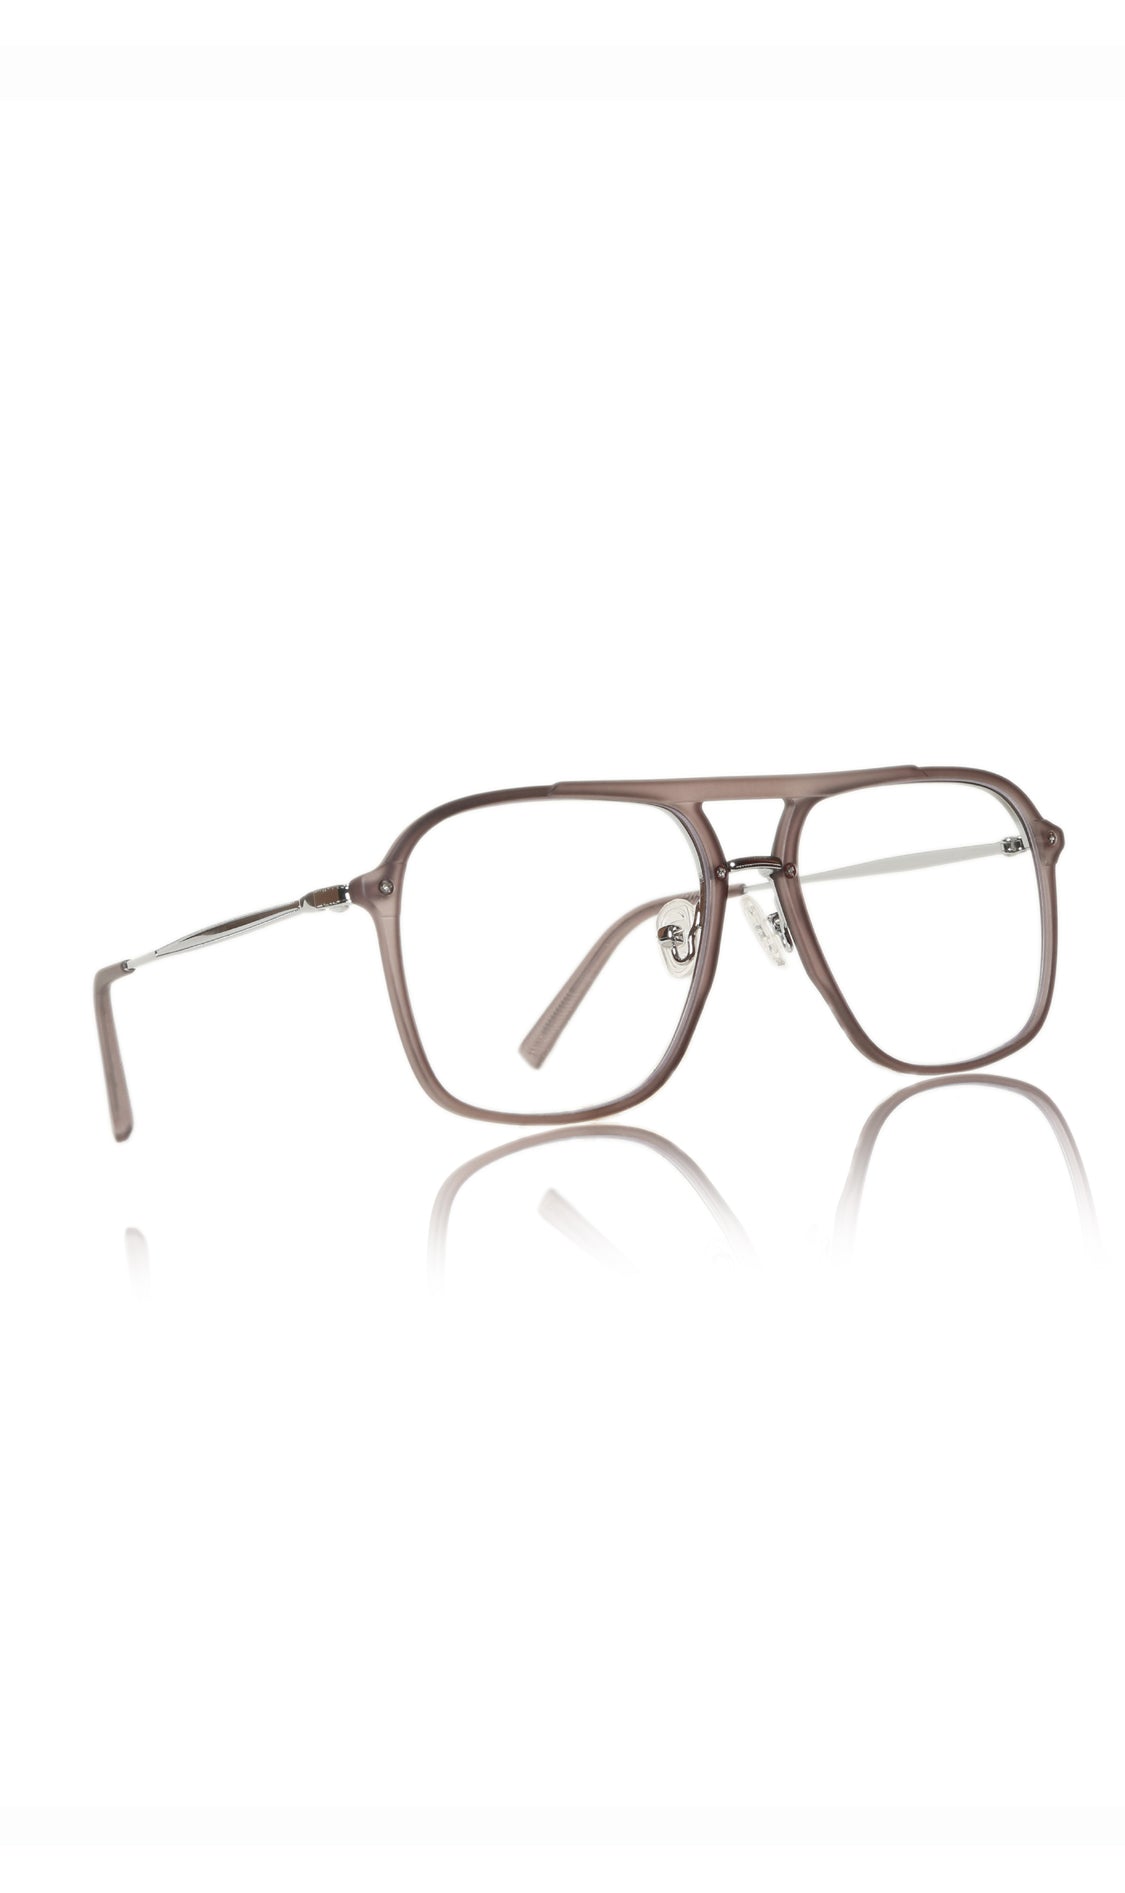 Jodykoes® Premium Series Double Bar Eyewear Eyeglasses Spectacles Frame for Men and Women (Matte Grey)